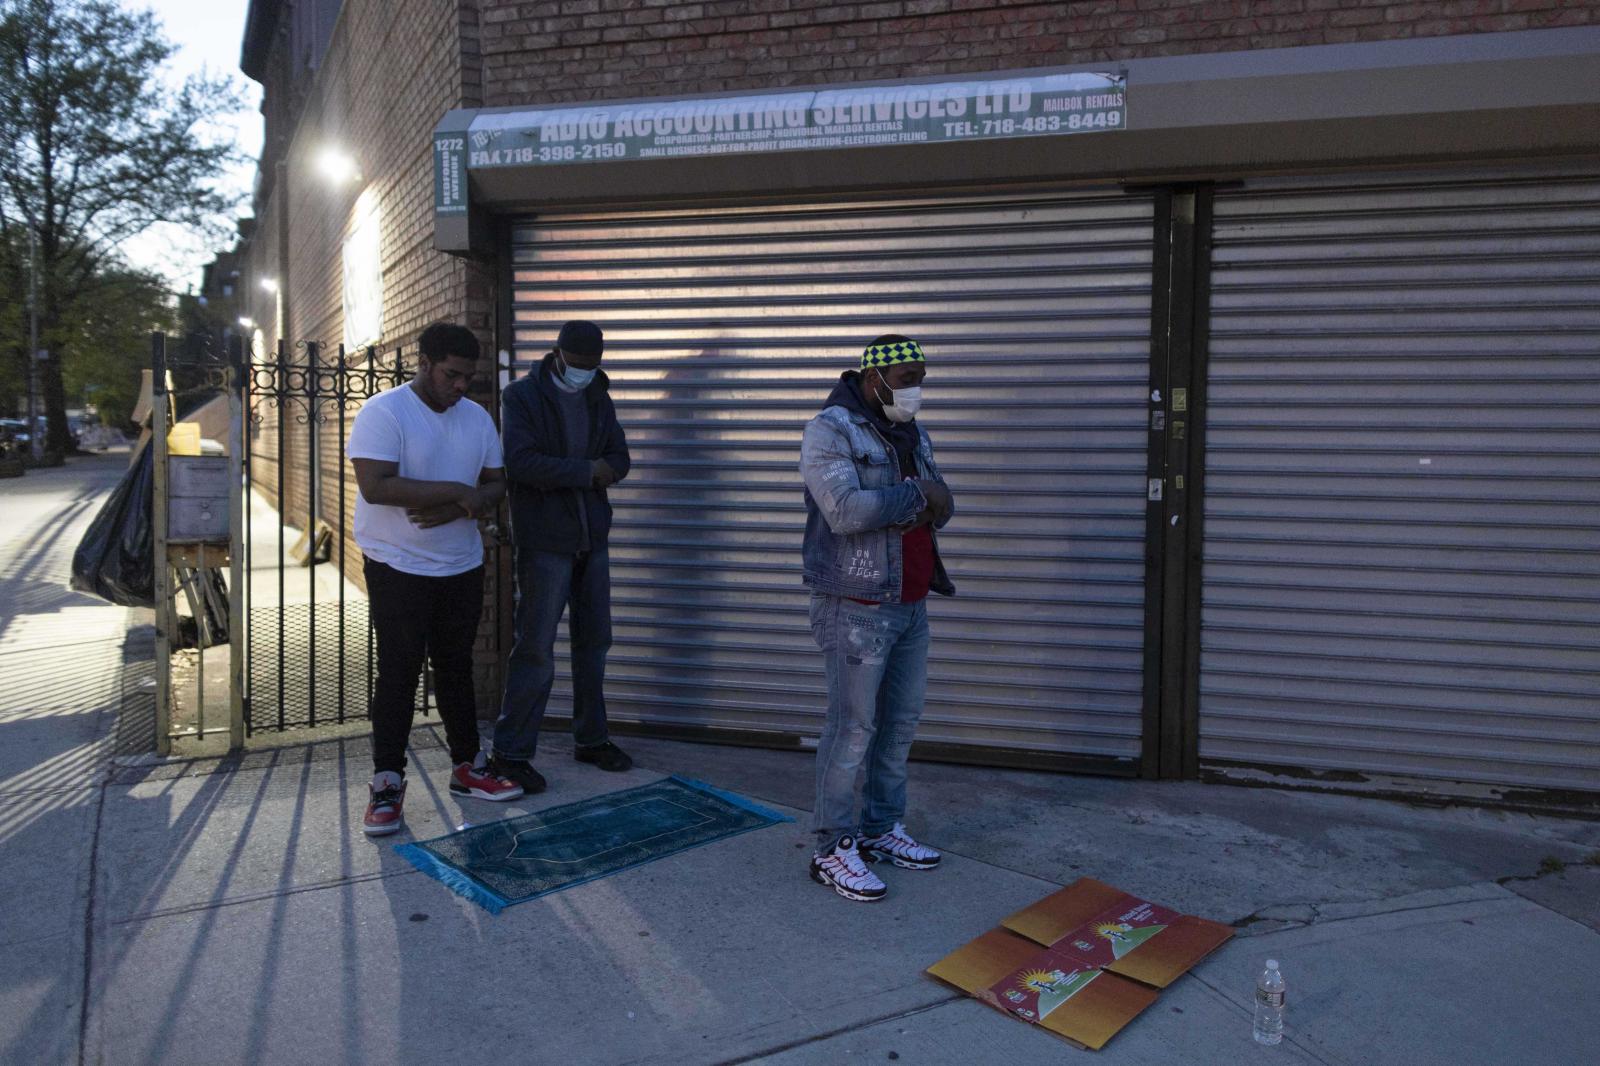 A group of muslim men praying M...e Pandemic, Brooklyn, New York.